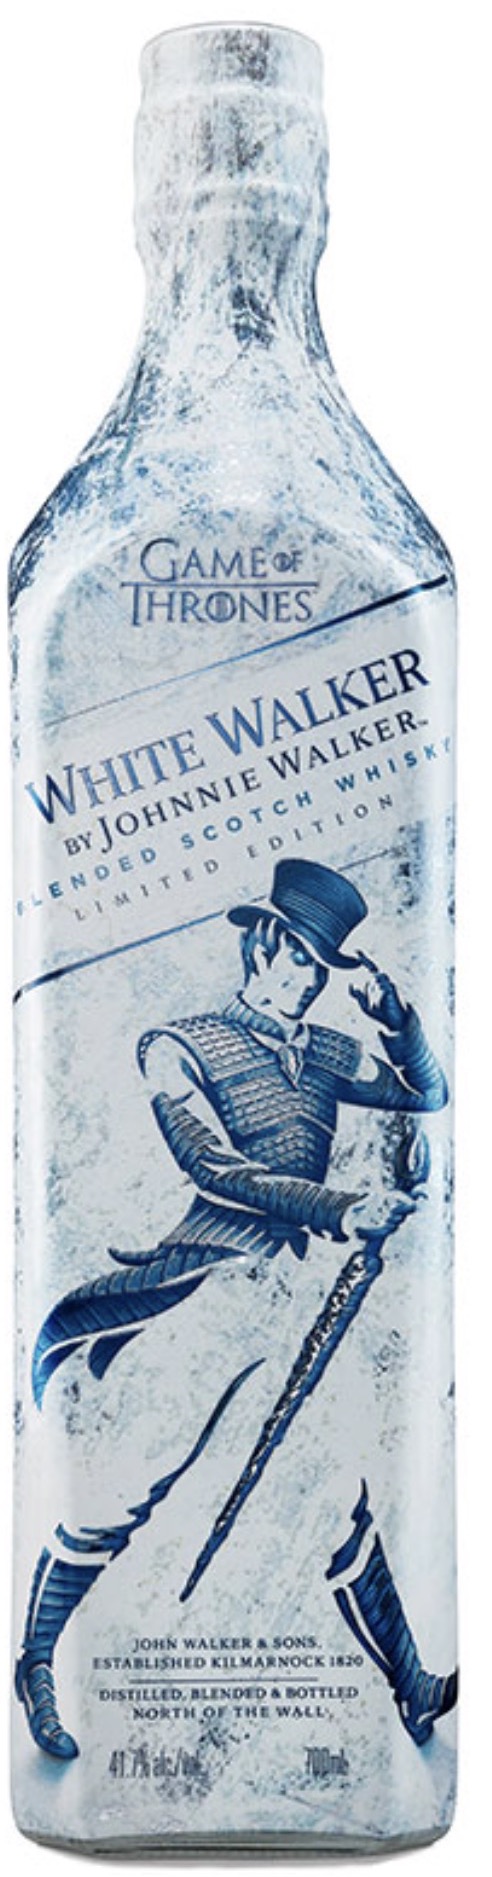 White Walker by Johnnie Walker Blended Scotch Whisky 41,7% vol. 0,7L